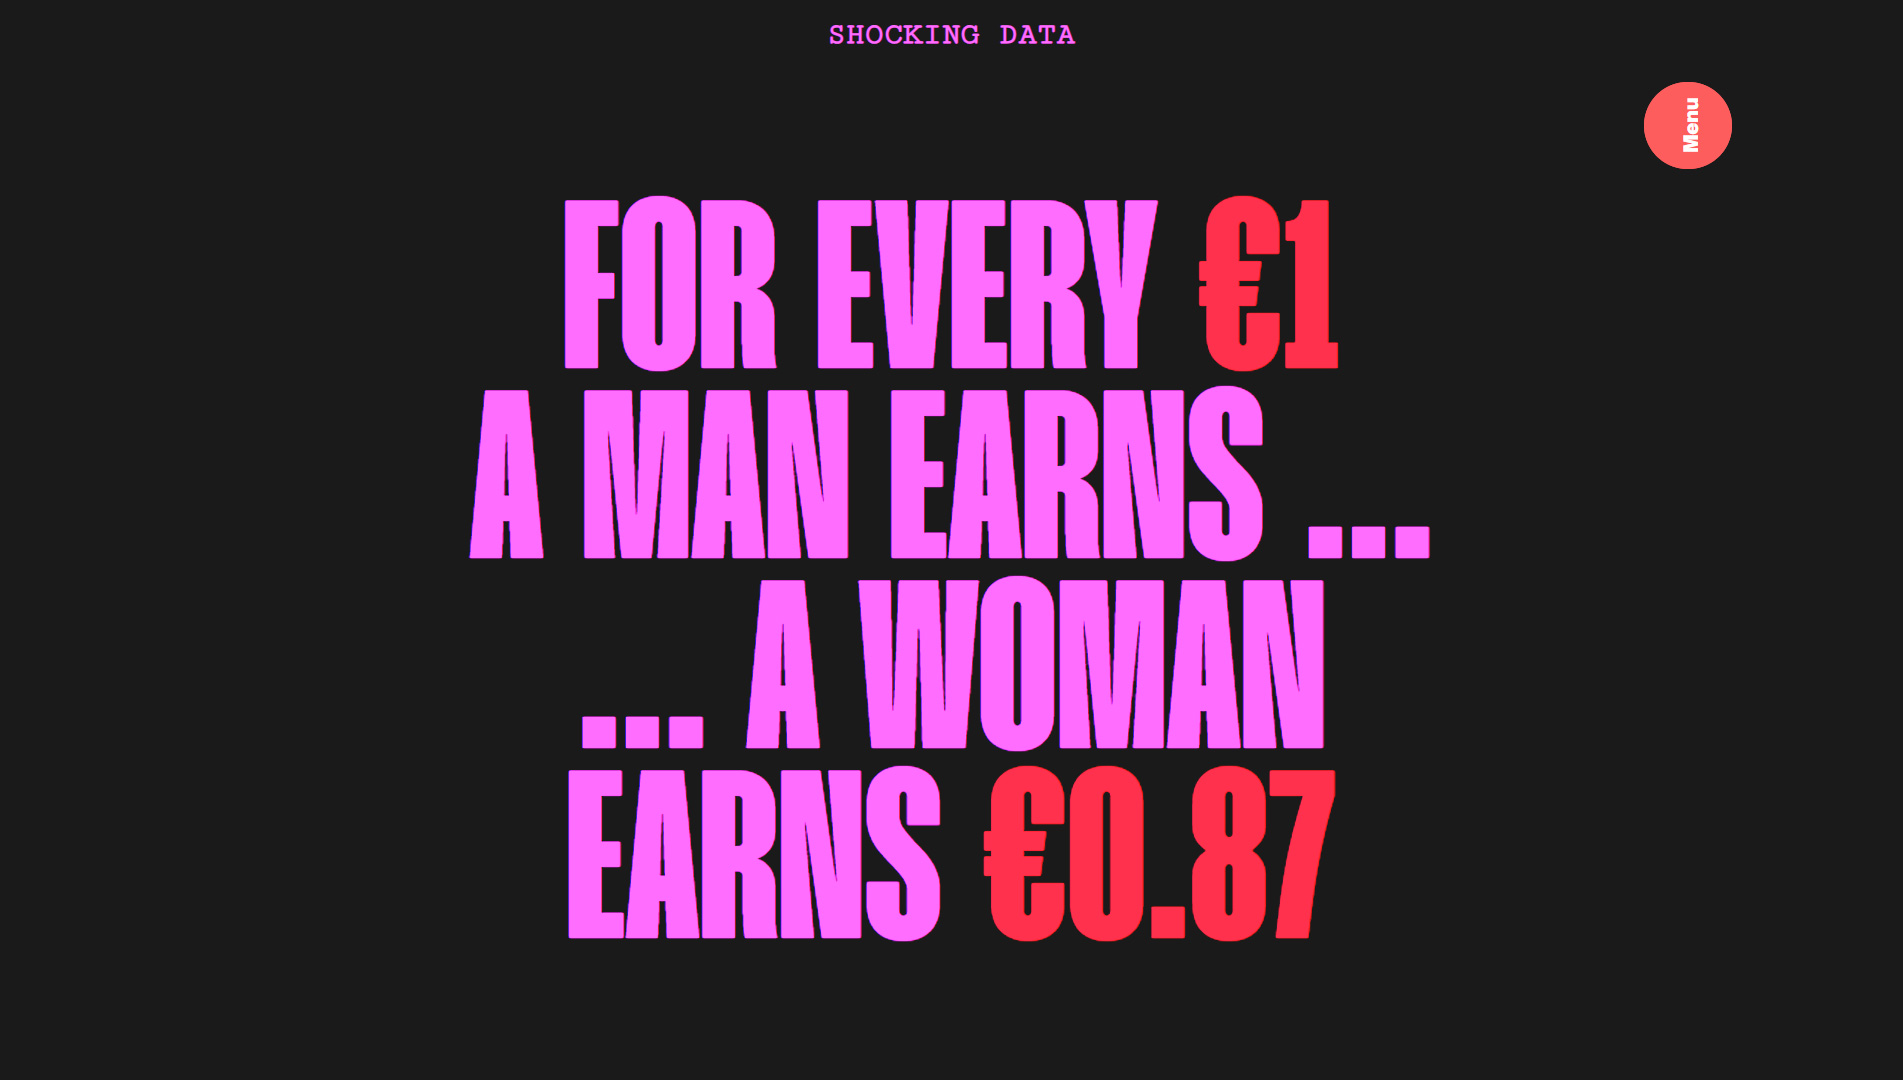 Mind the gender pay gap